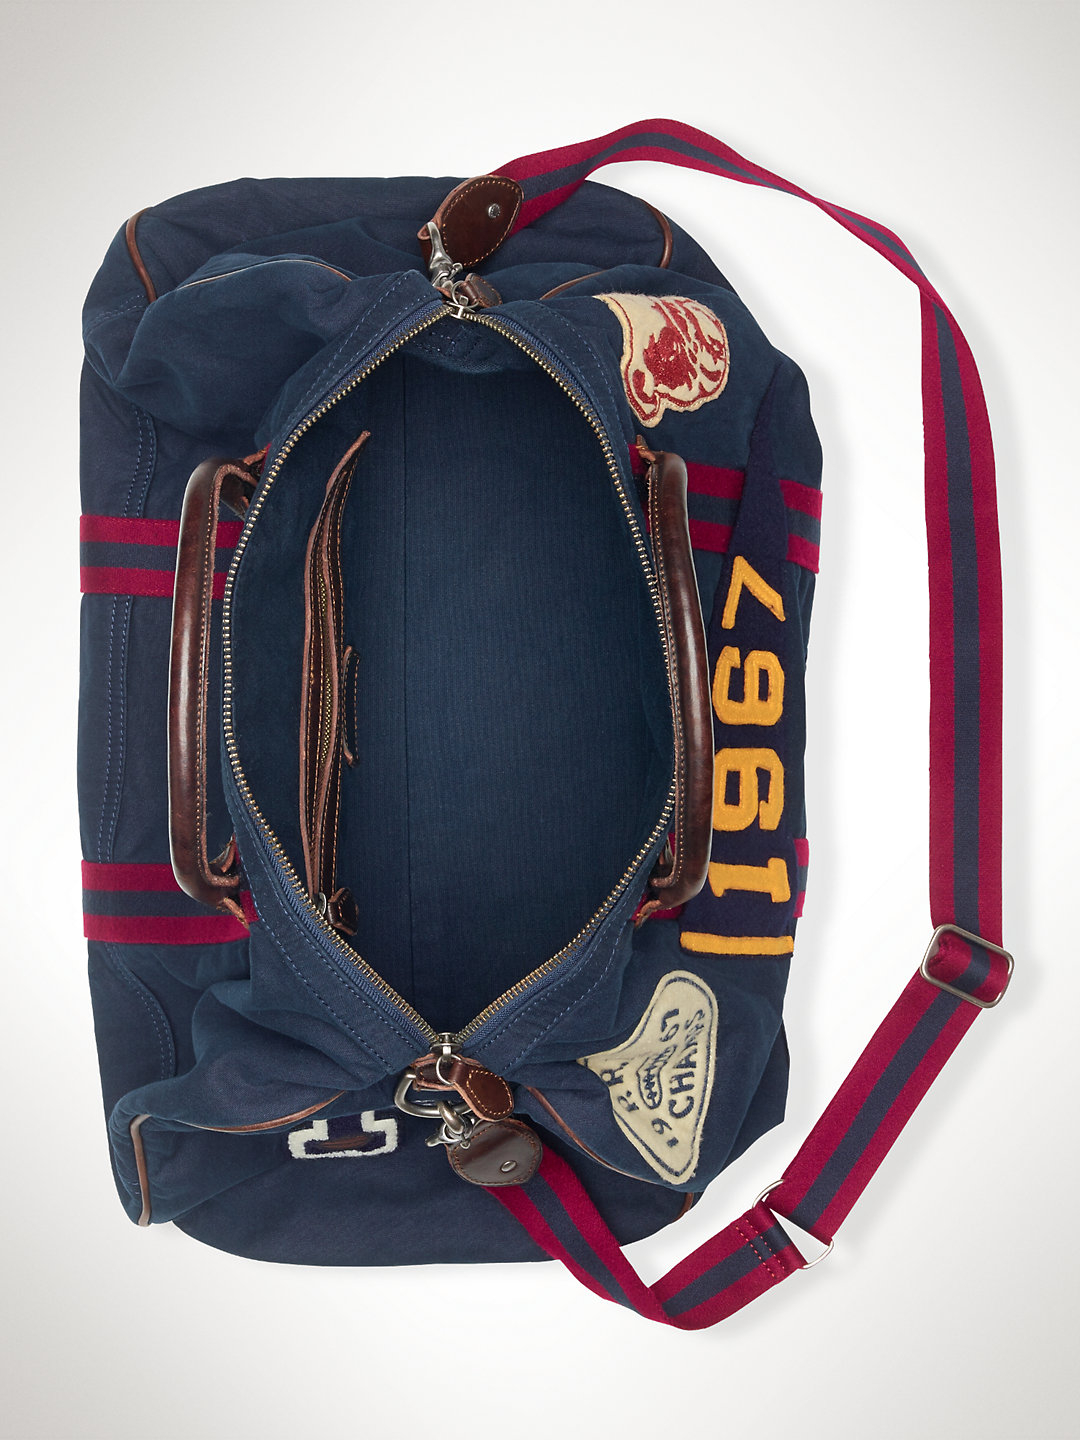 Polo Ralph Lauren Canvas Stadium Duffel Bag in Navy (Blue) for Men - Lyst